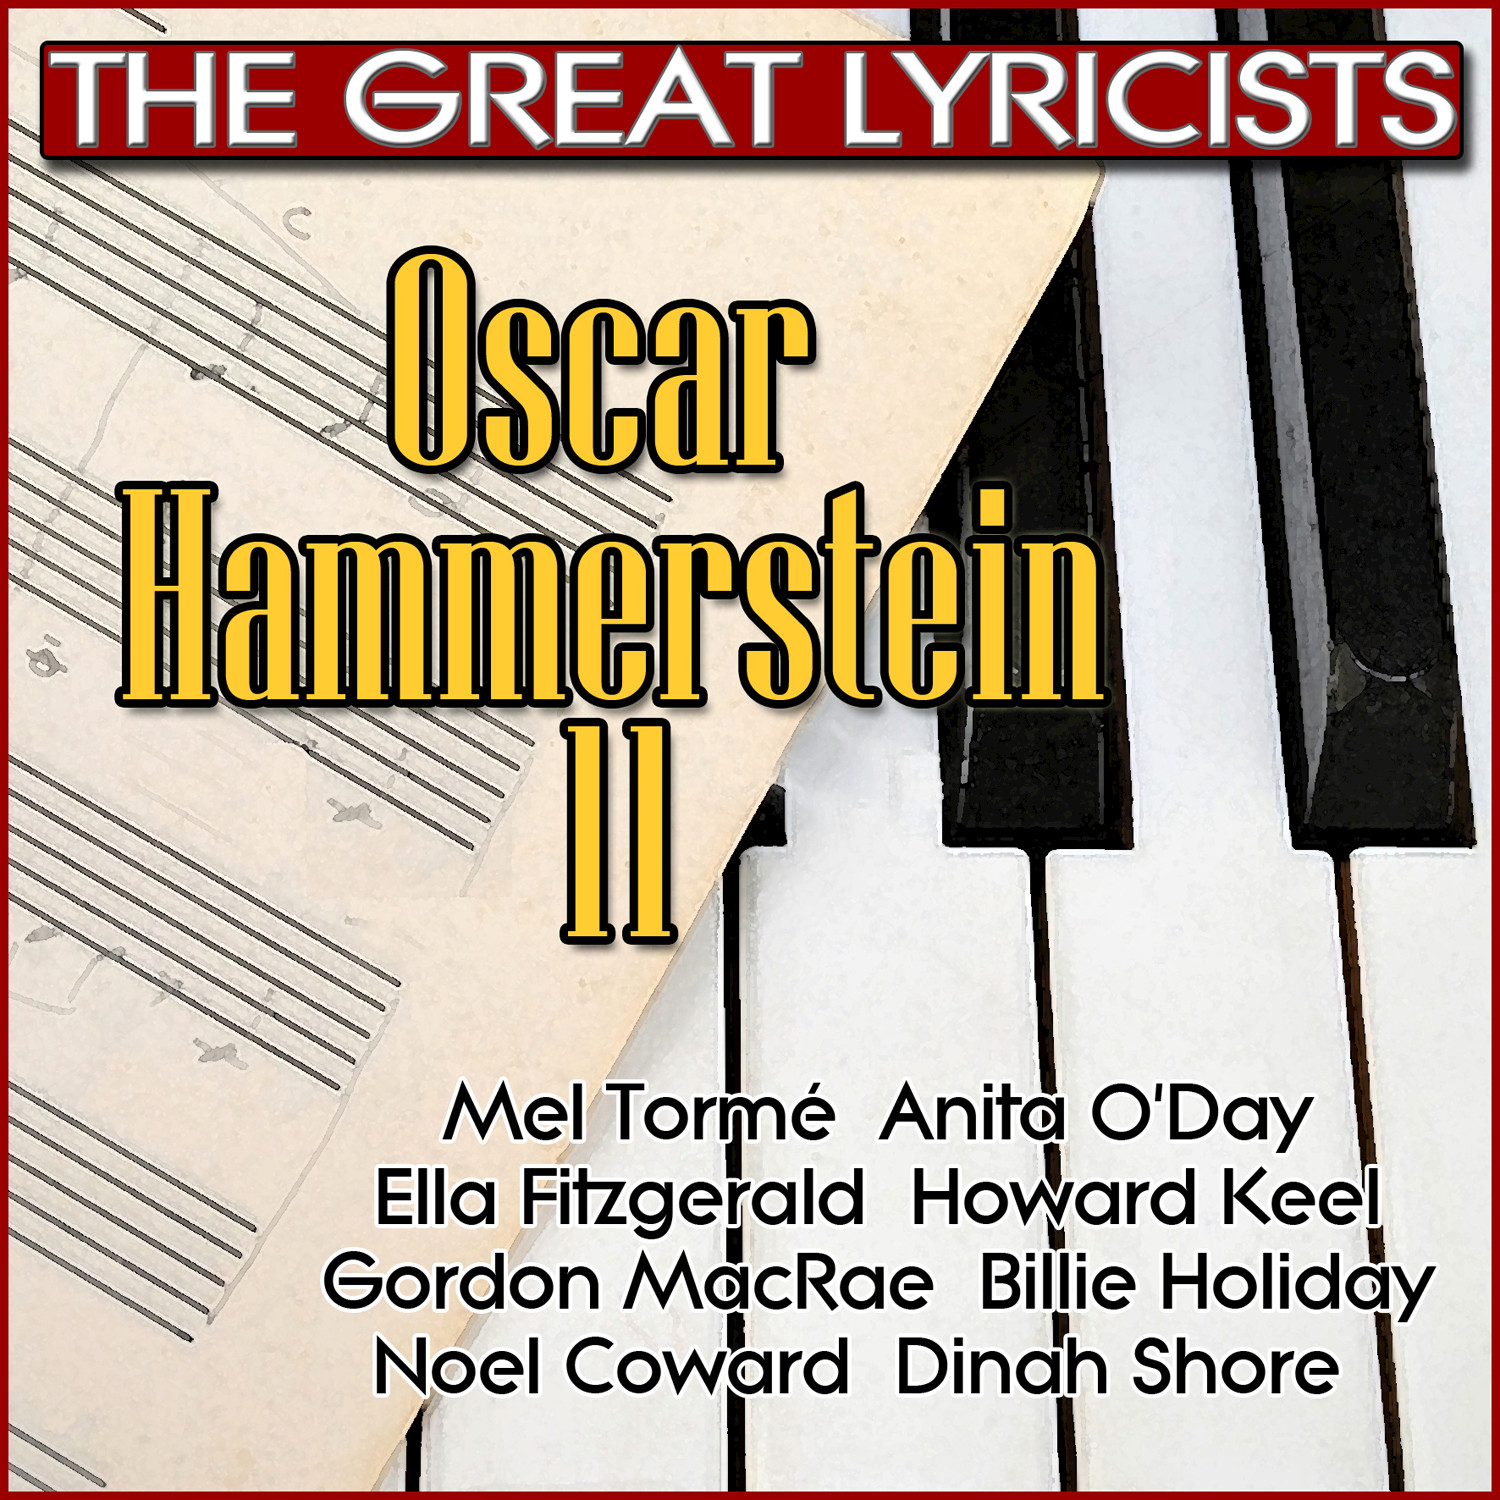 The Great Lyricists – Oscar Hammerstein II